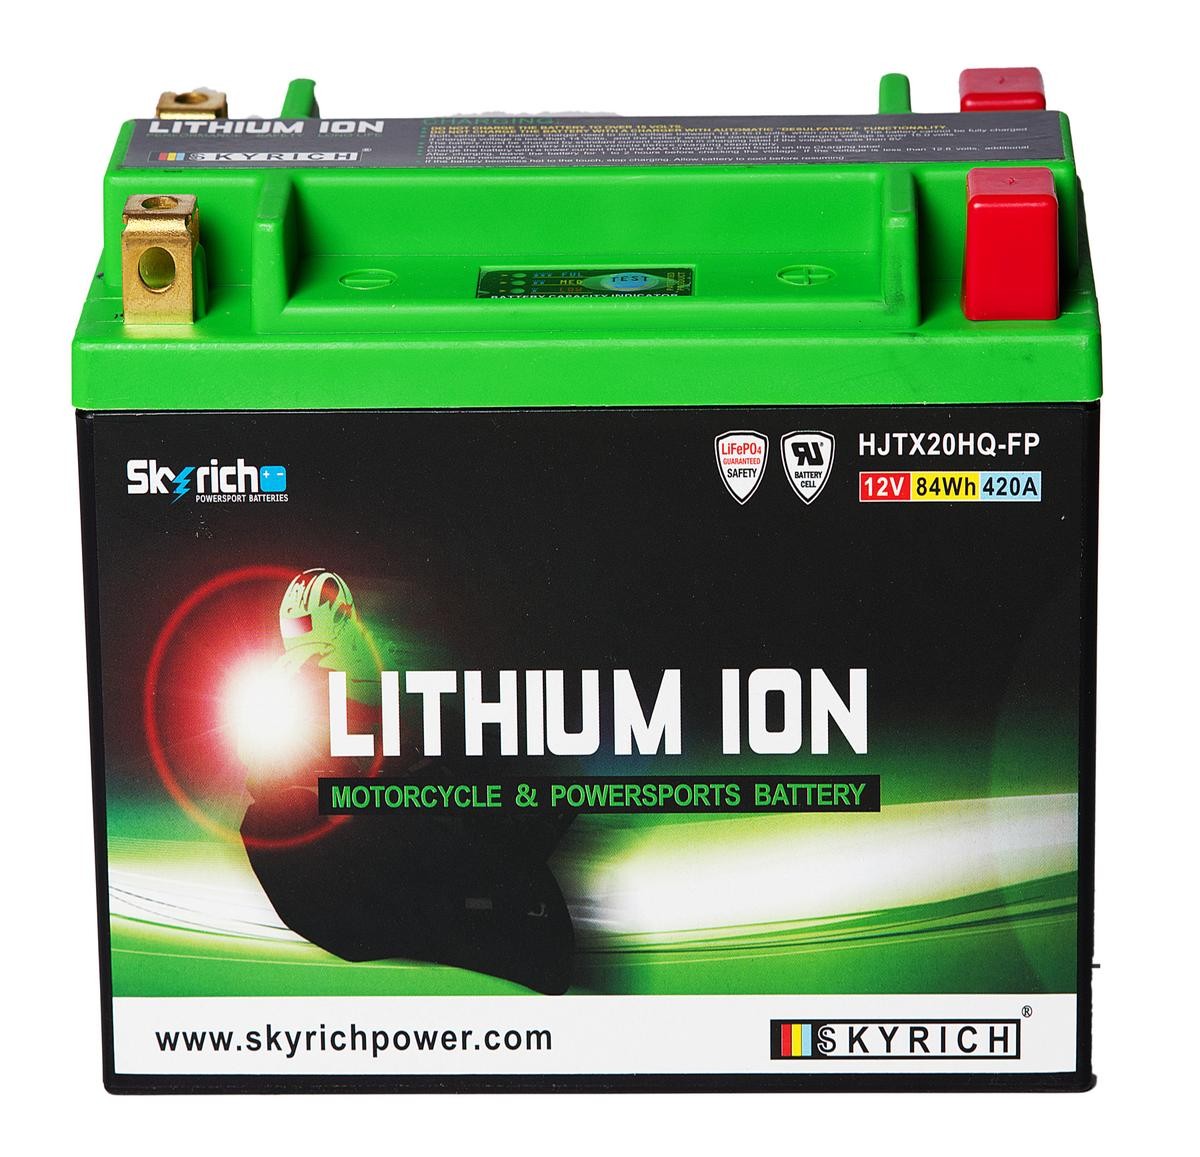 HARLEY-DAVIDSON SOFTAIL Batterie 12V 7Ah 420A N Li-Ionen-Batterie SKYRICH LITHIUM ION HJTX20HQ-FP